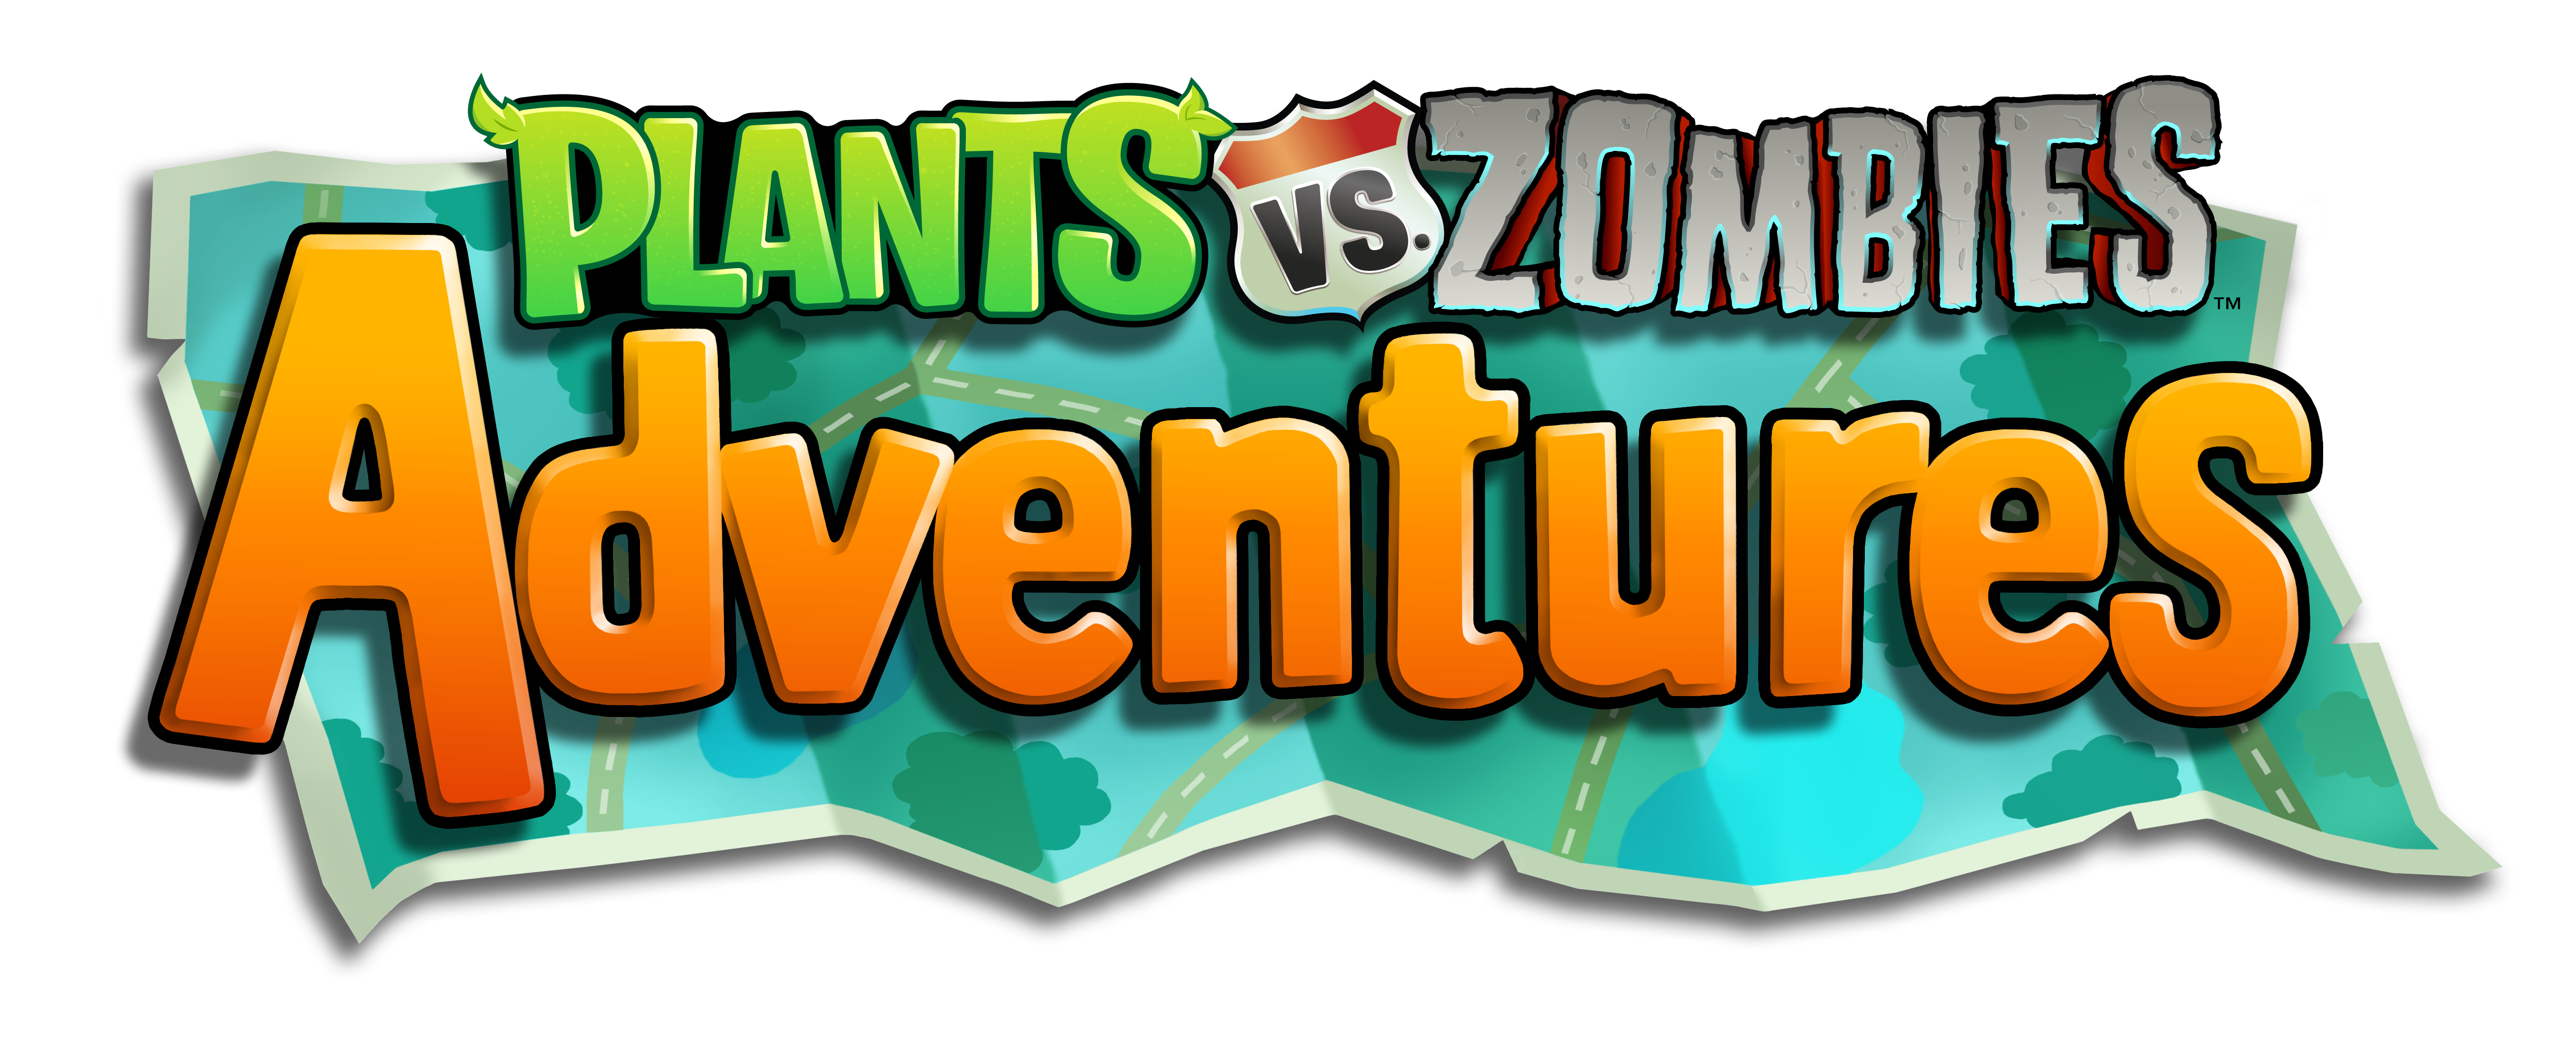 vs. Zombies | Plants vs. Zombies Wiki | Fandom